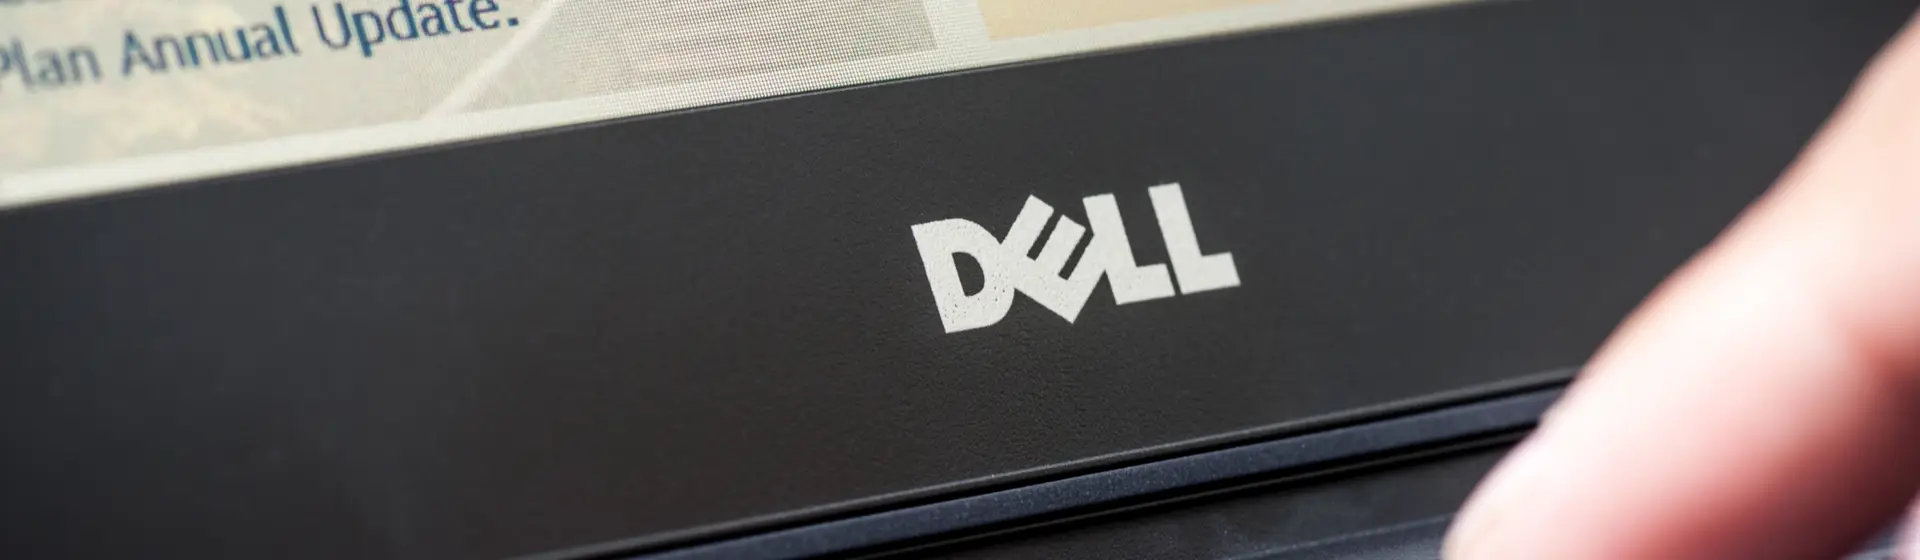 Notebook Dell aberto aproximado com foco no símbolo da marca